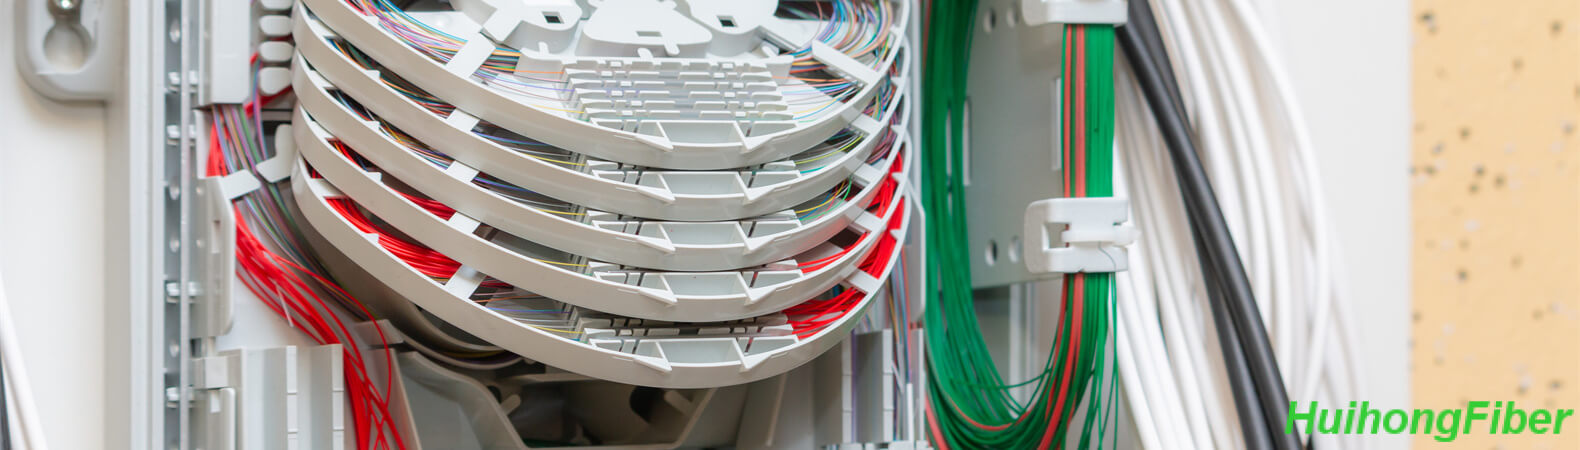 installing fiber optic splice trays in telecommunications enclosures